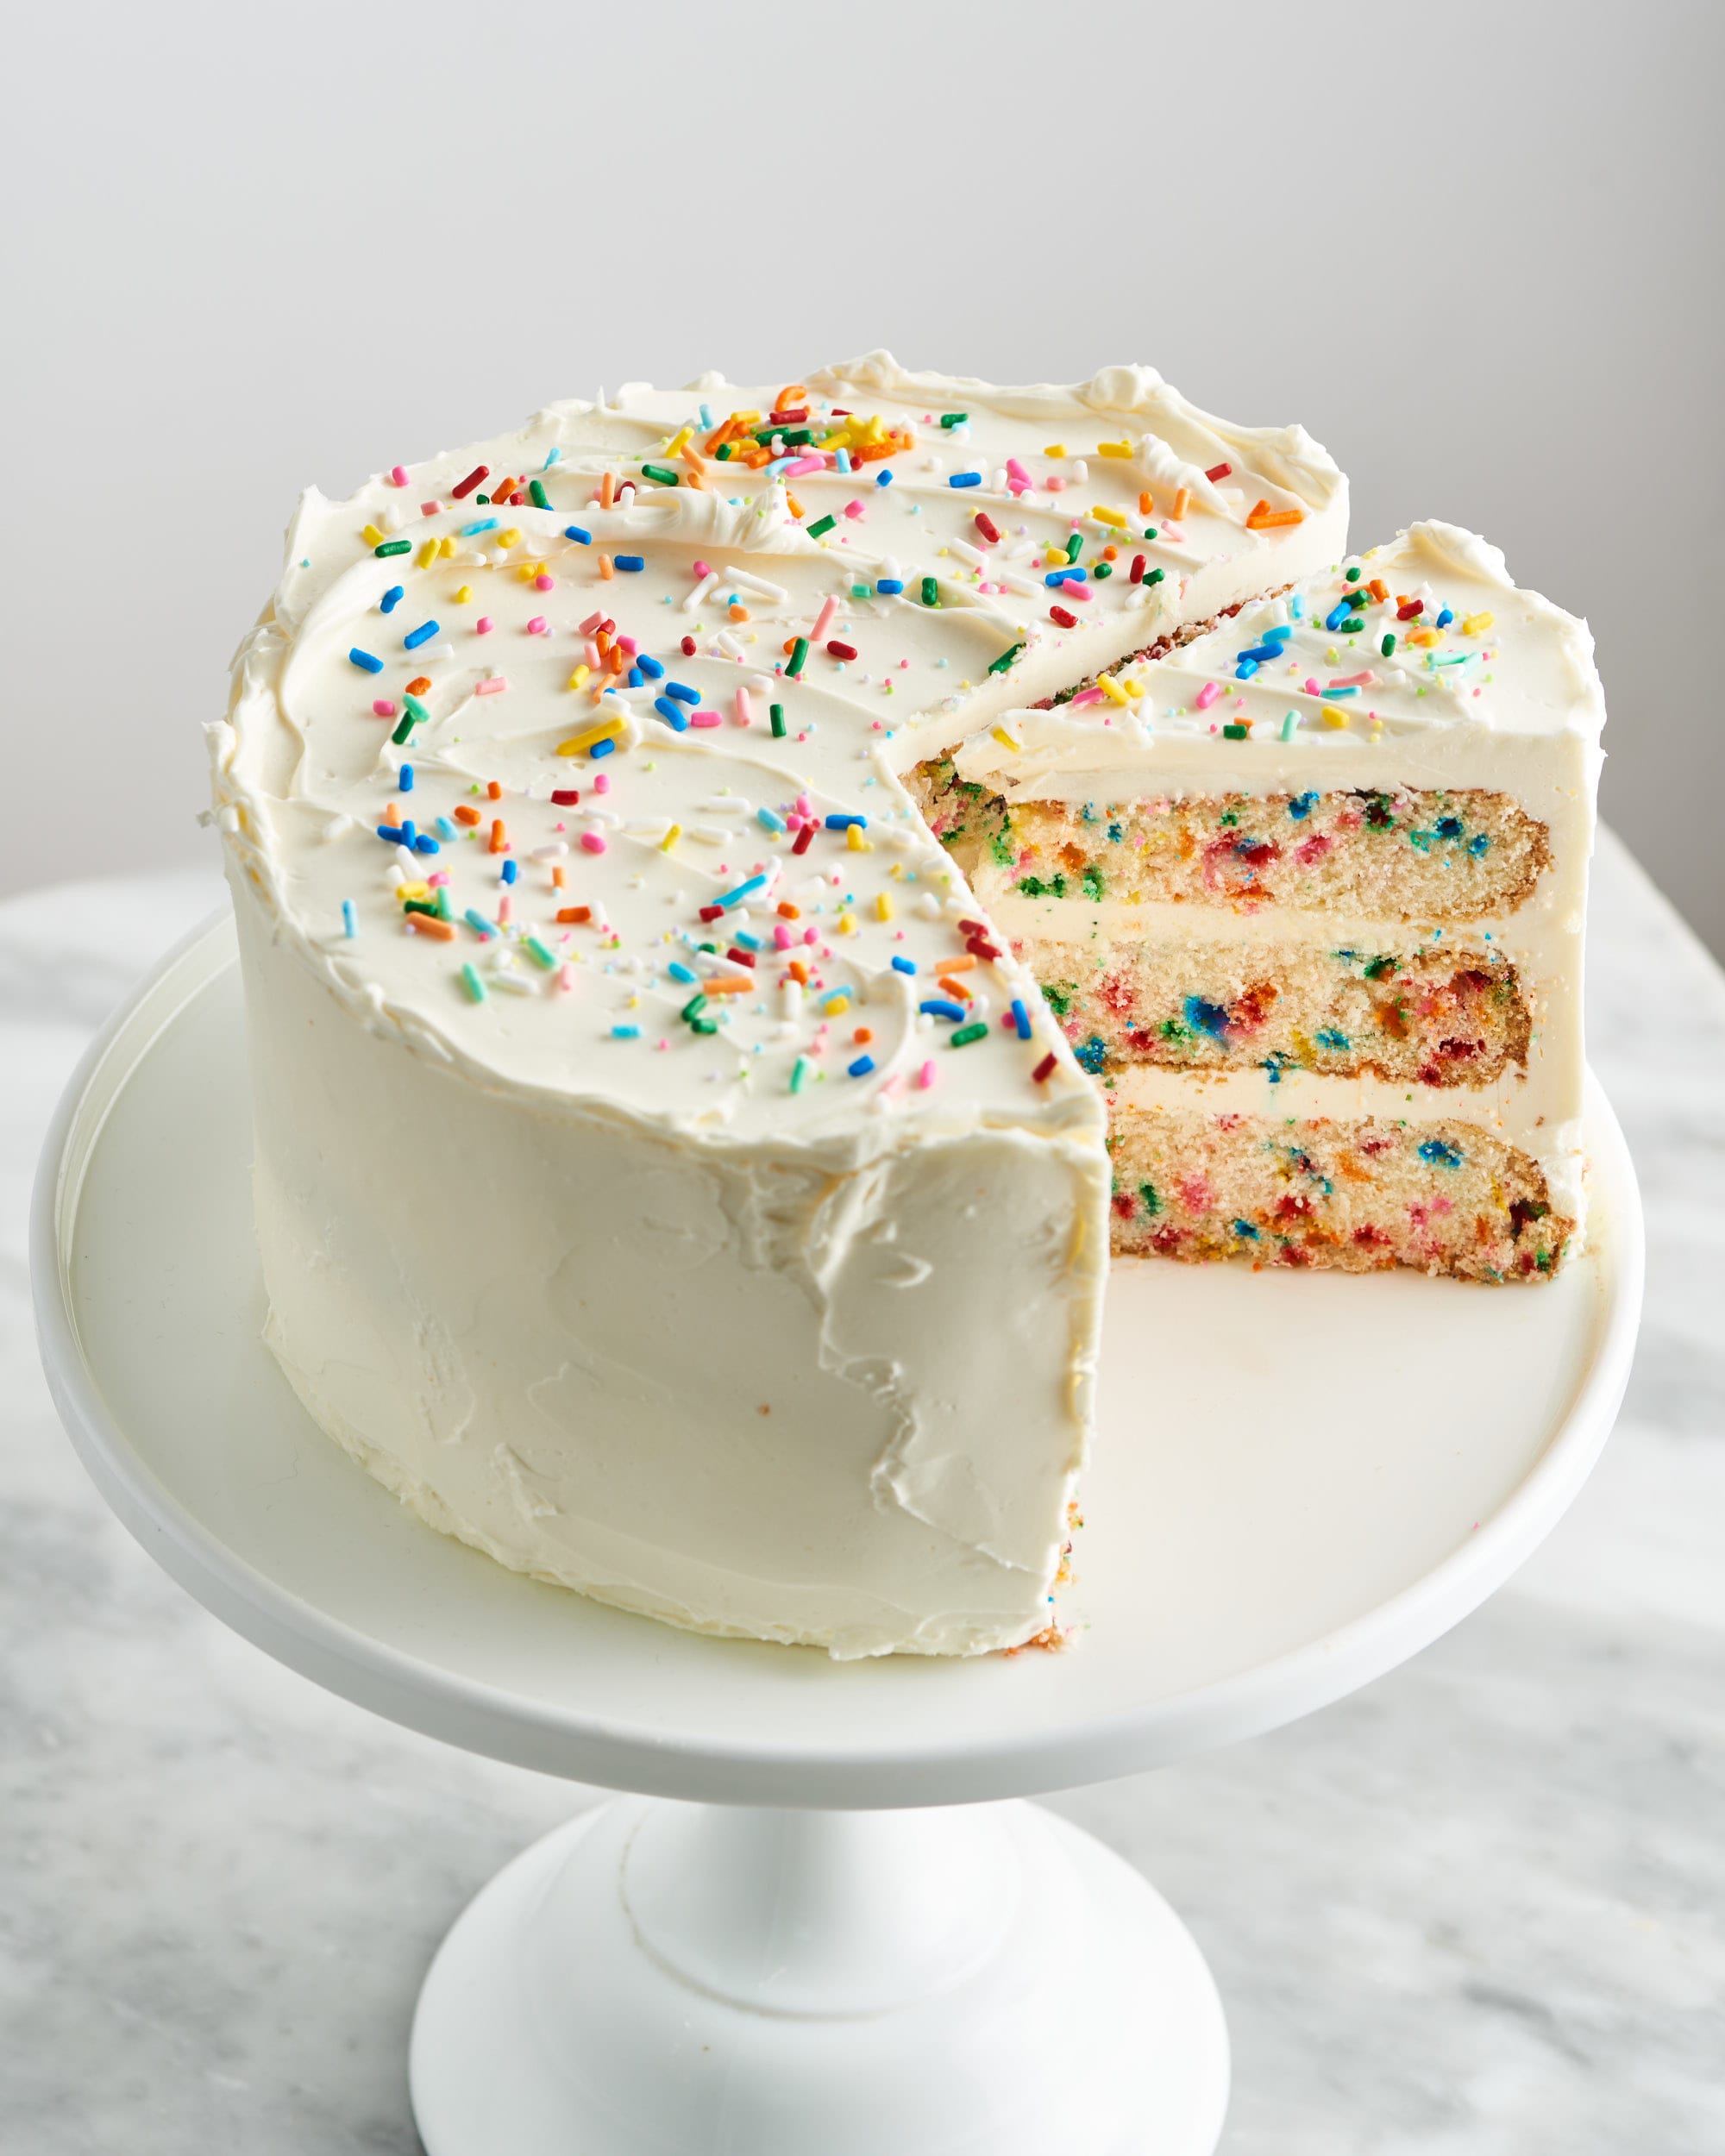 I Tried Martha Stewart's Sprinkle Cake Recipe